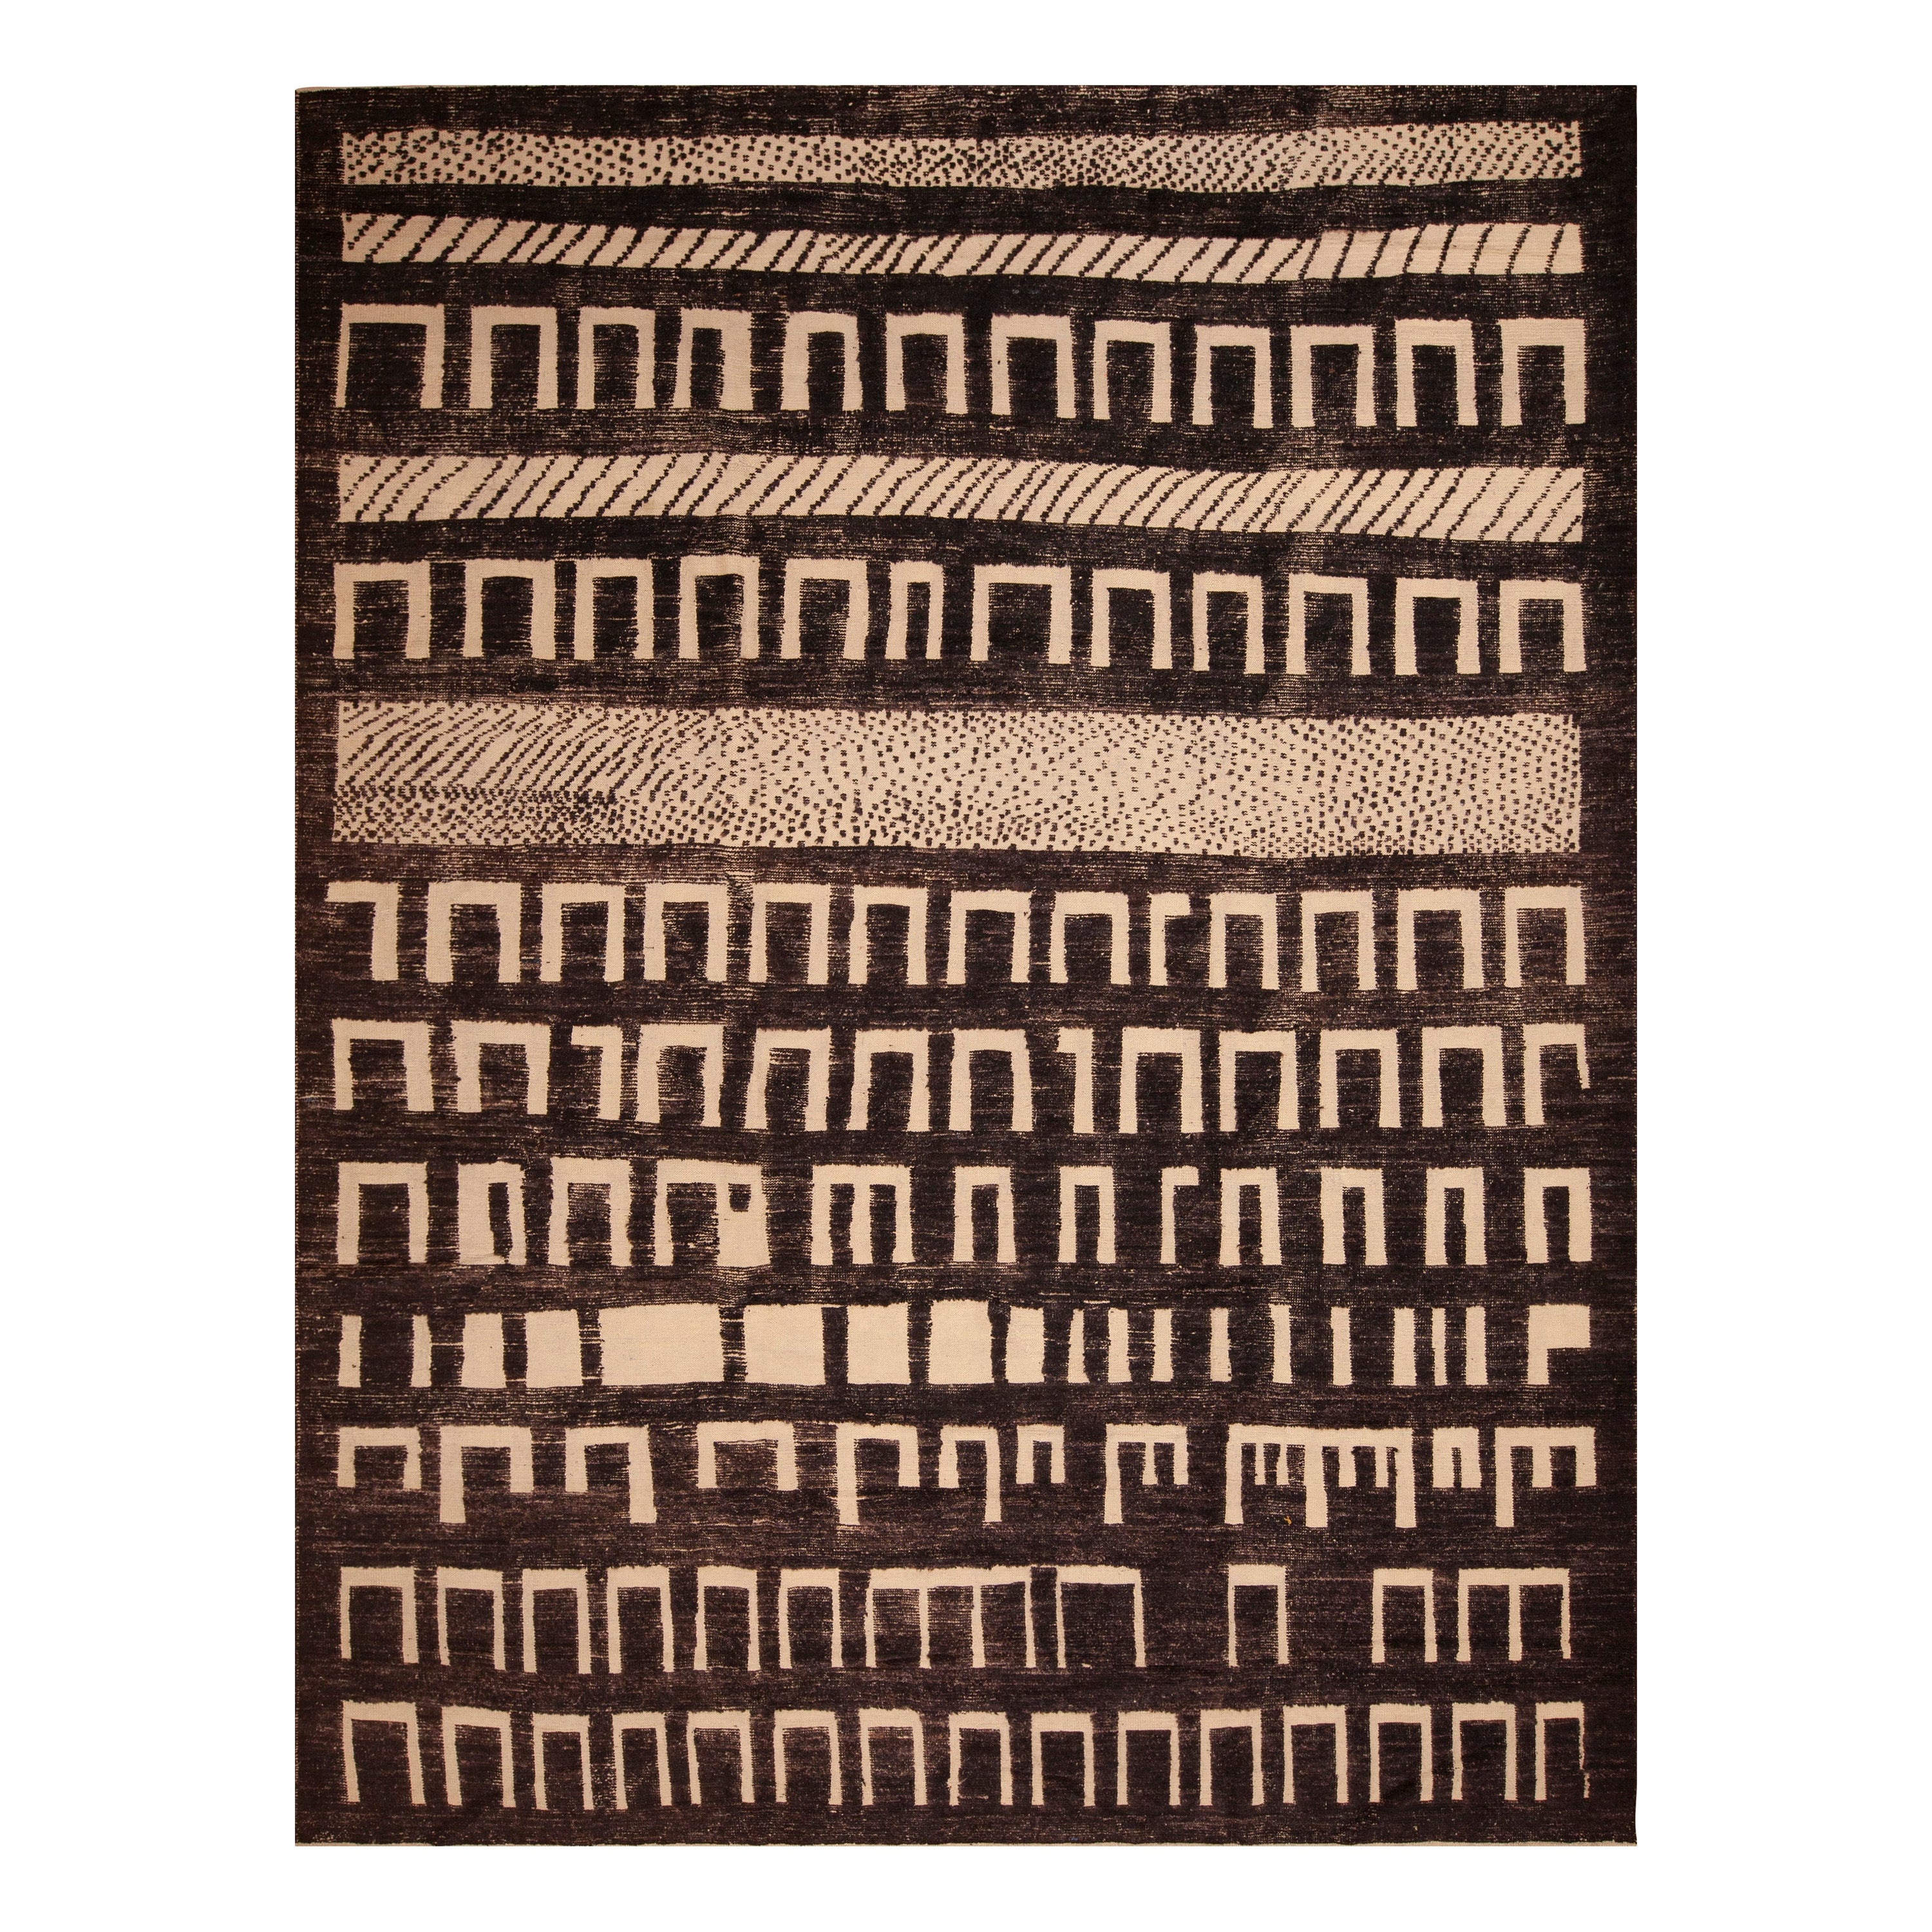 Nazmiyal Collection Graphic Tribal Primitive Geometric Modern Rug 10'3" x 13'8"